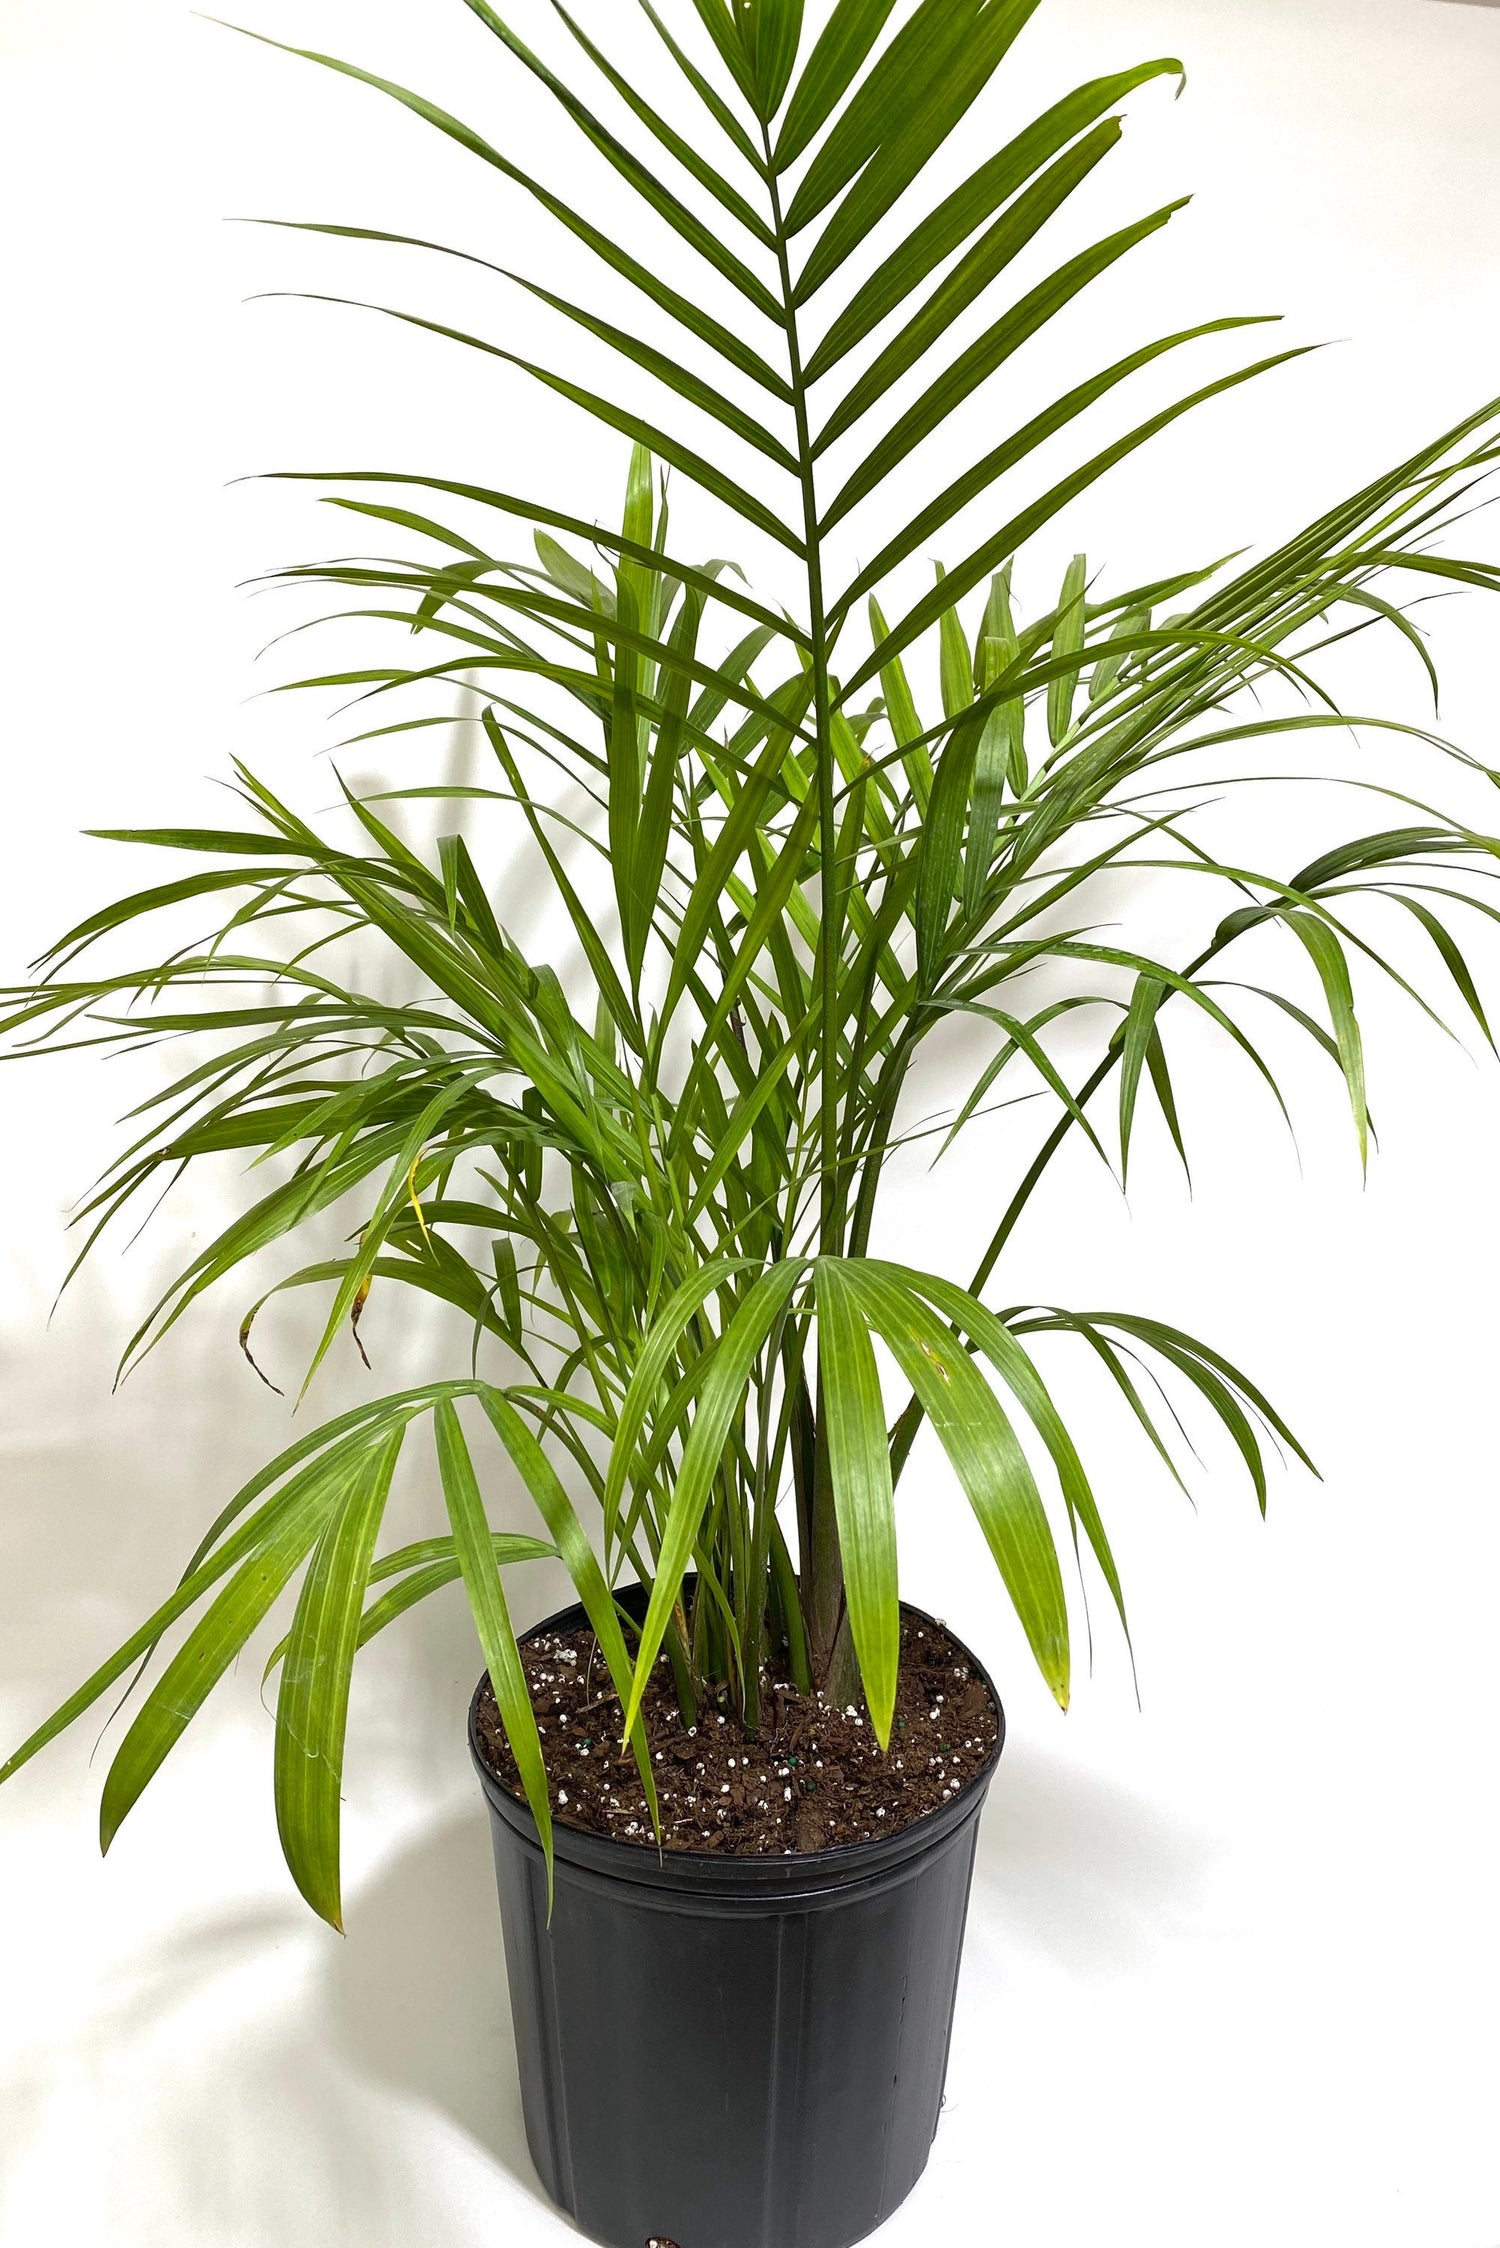 Majesty Palm, Ravenea Rivularis Live Indoor Plant